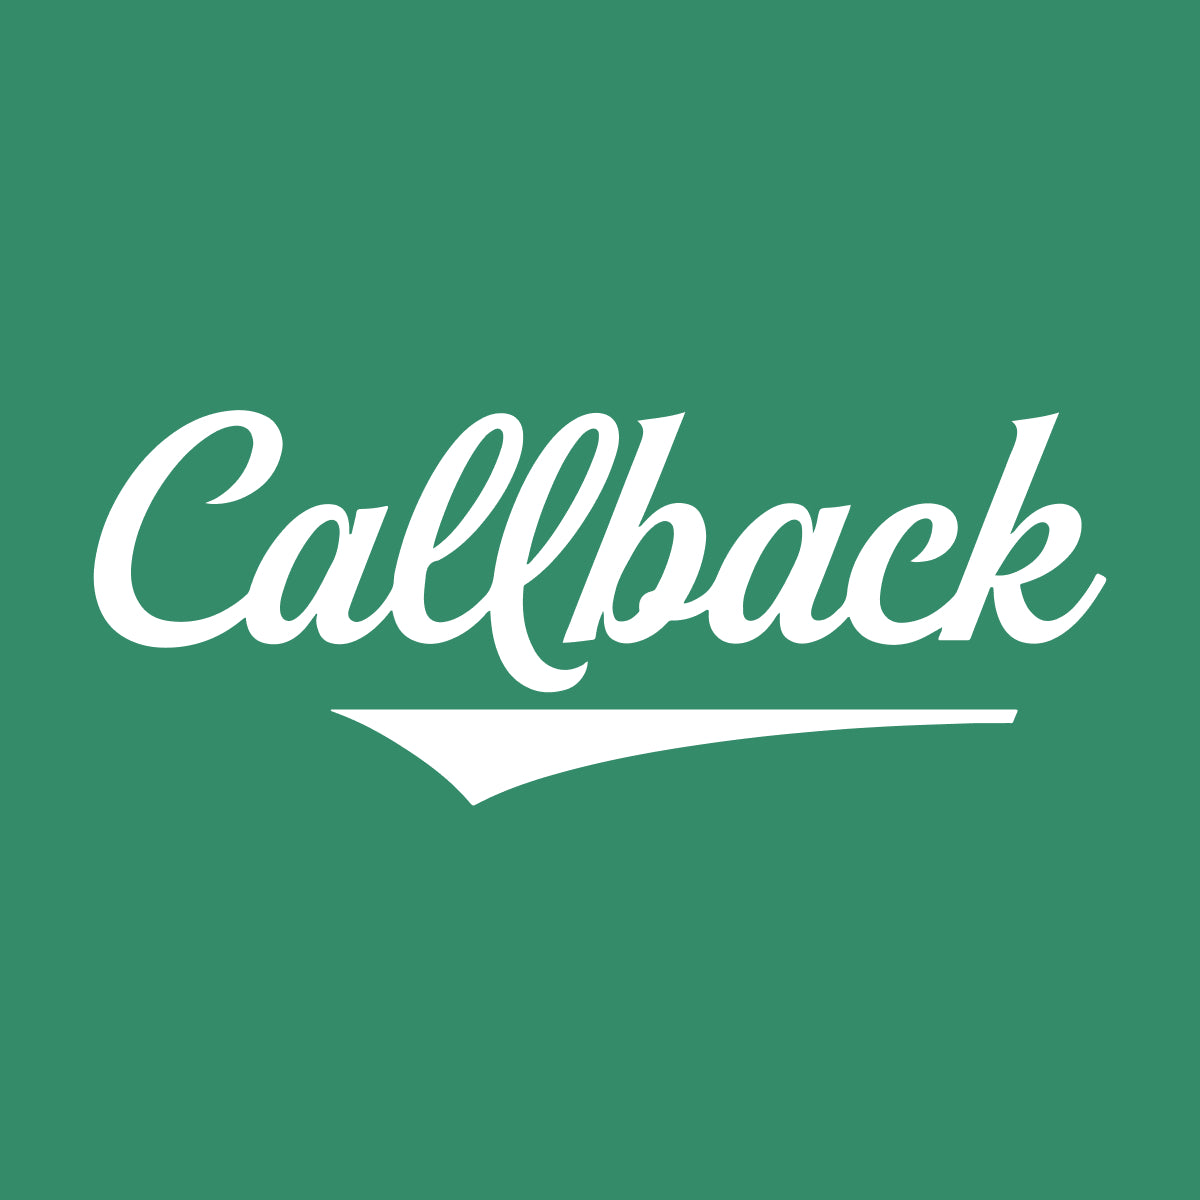 Callback Request